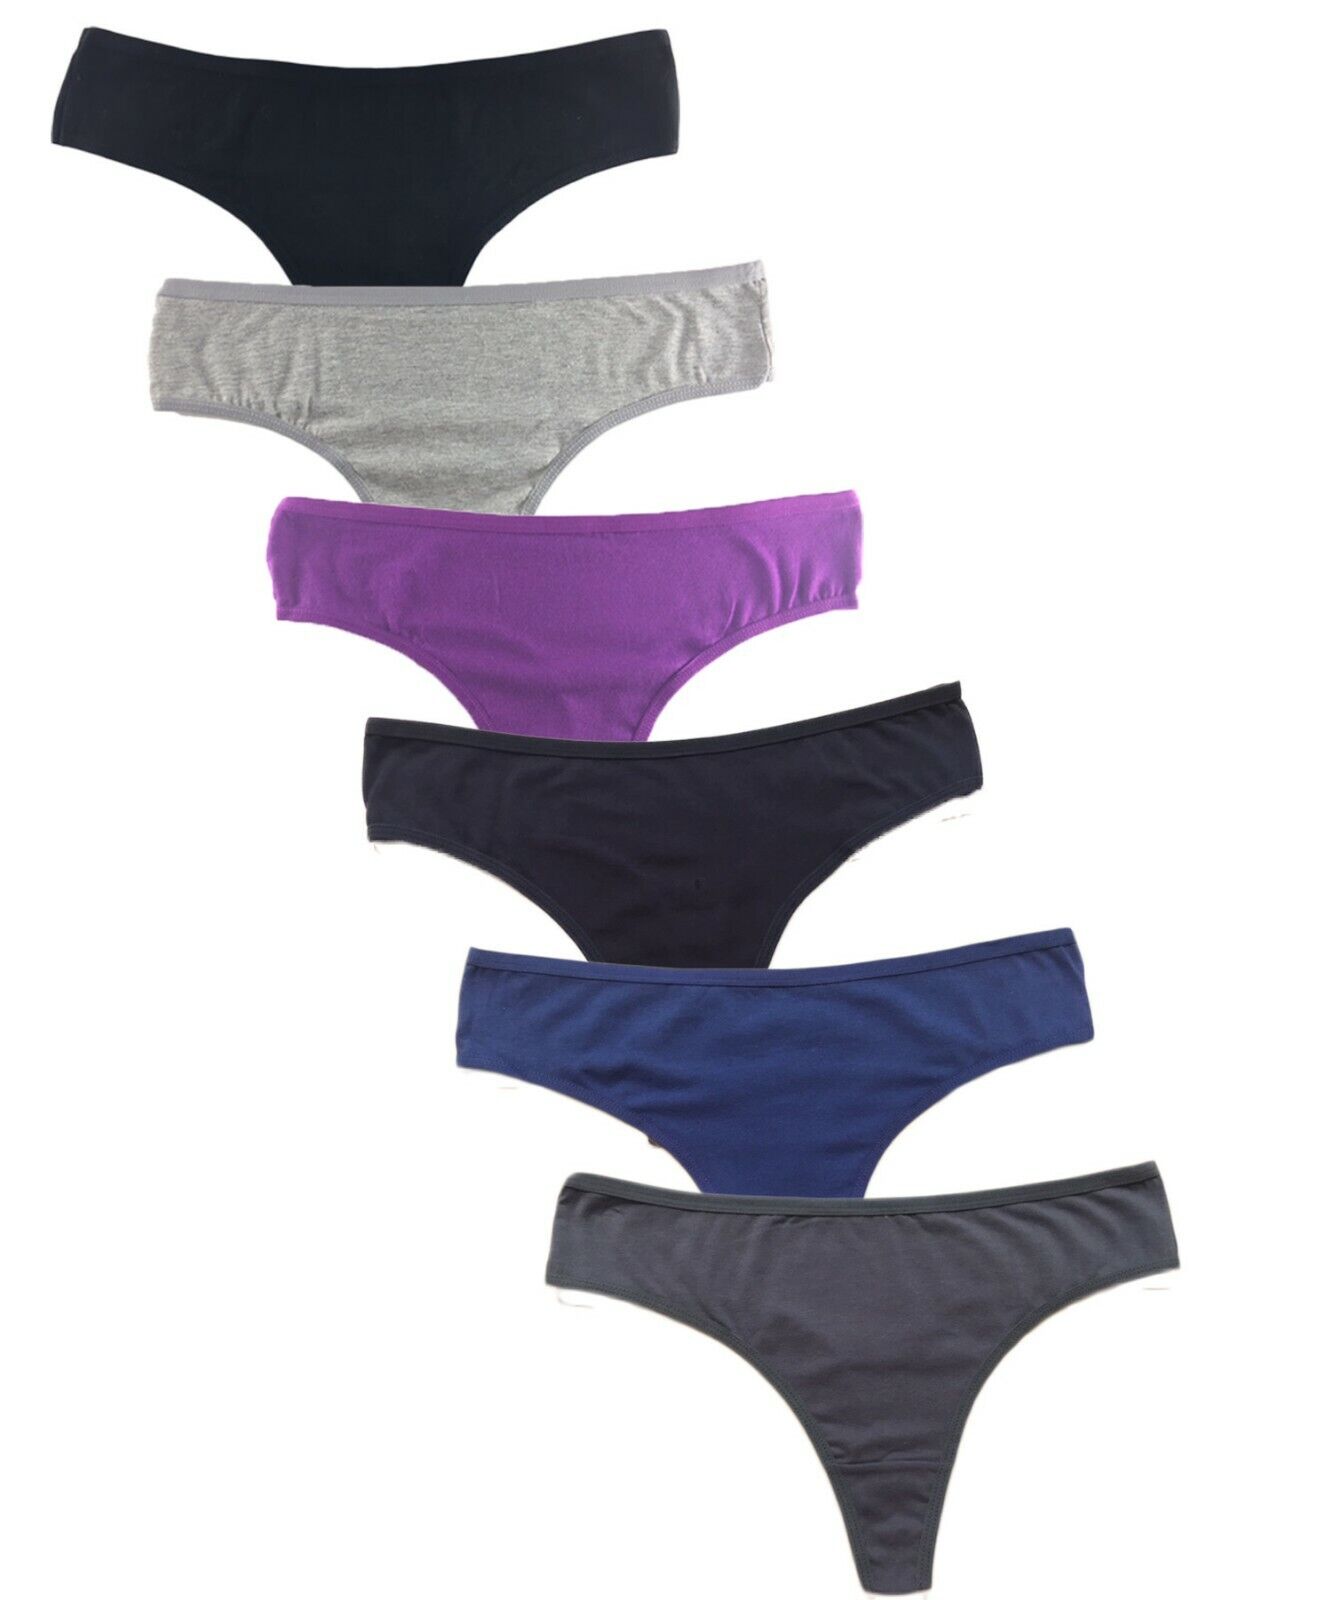 6 Womens Cotton Thongs Yoga Sport Underwear G String Dark Colors Panties Size S Nabtos